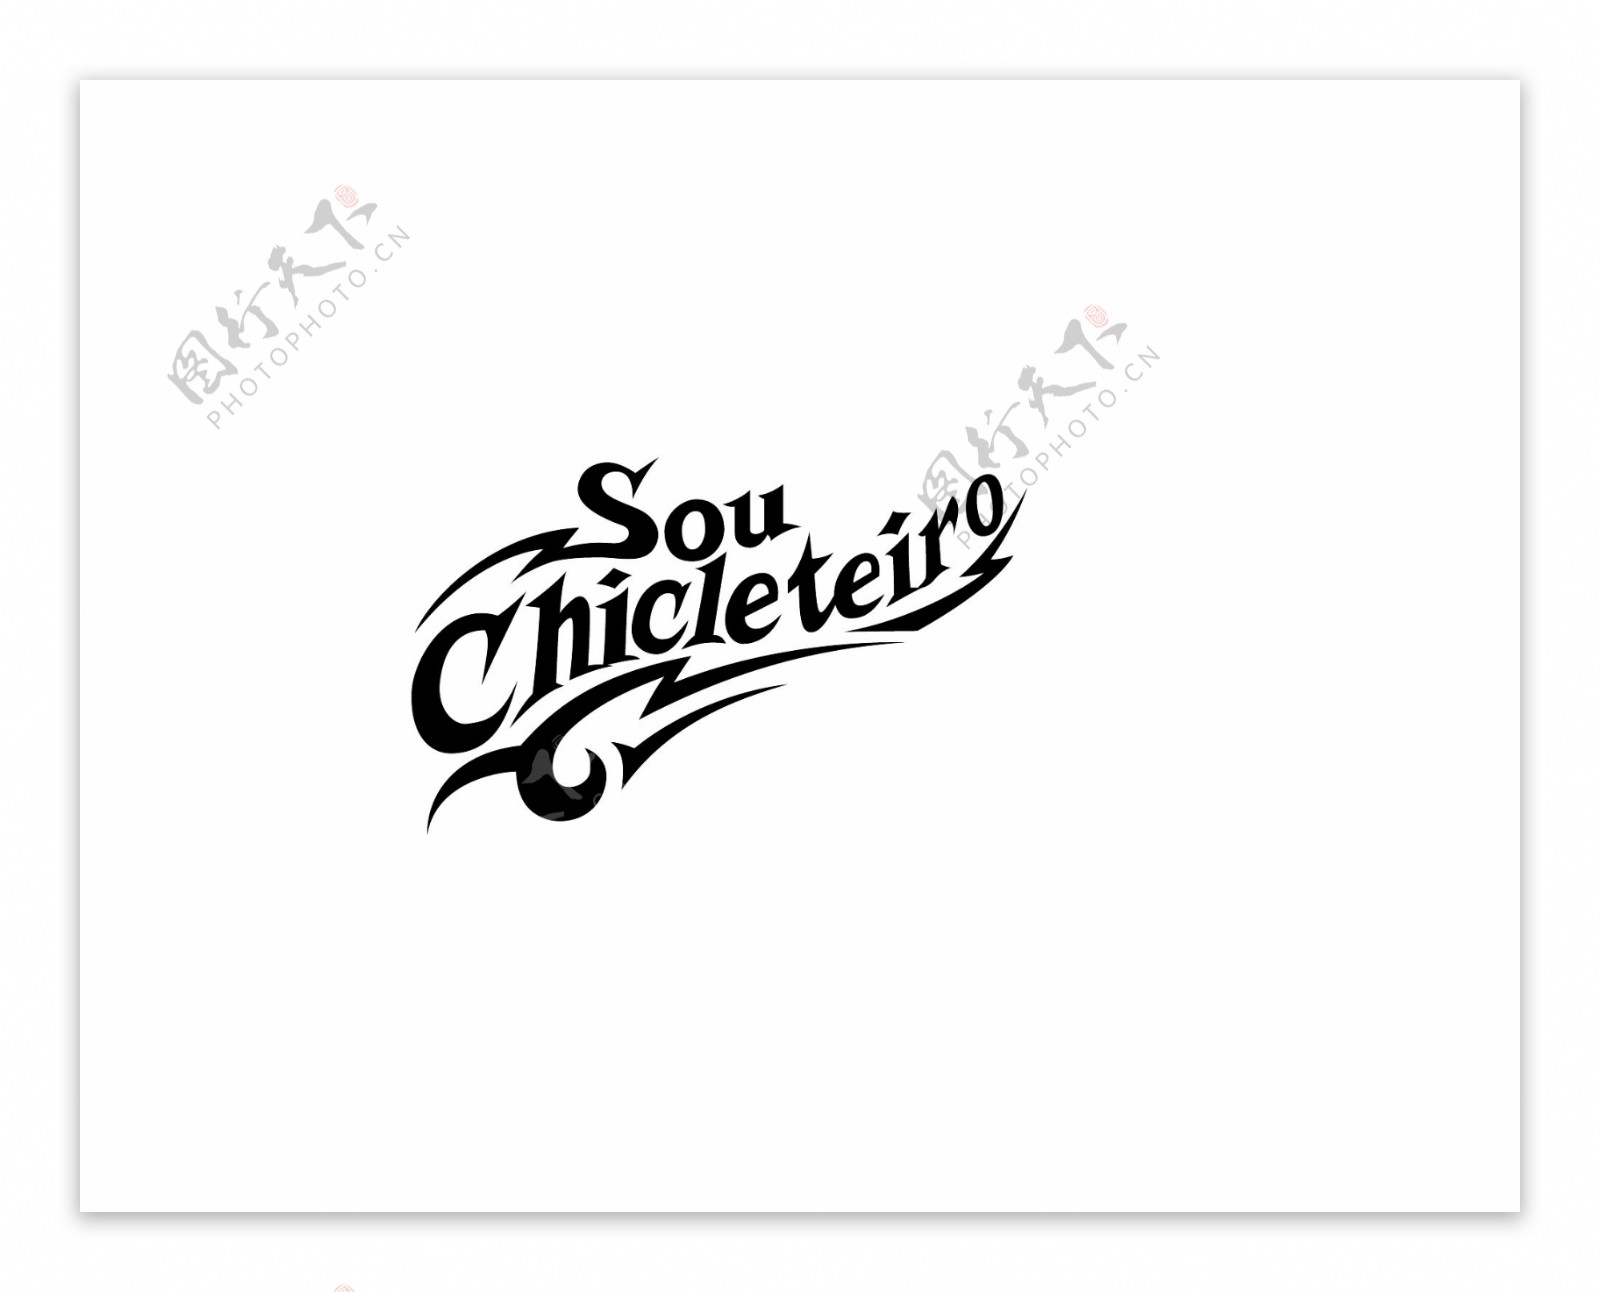 Chicleteirologo设计欣赏Chicleteiro音乐相关标志下载标志设计欣赏